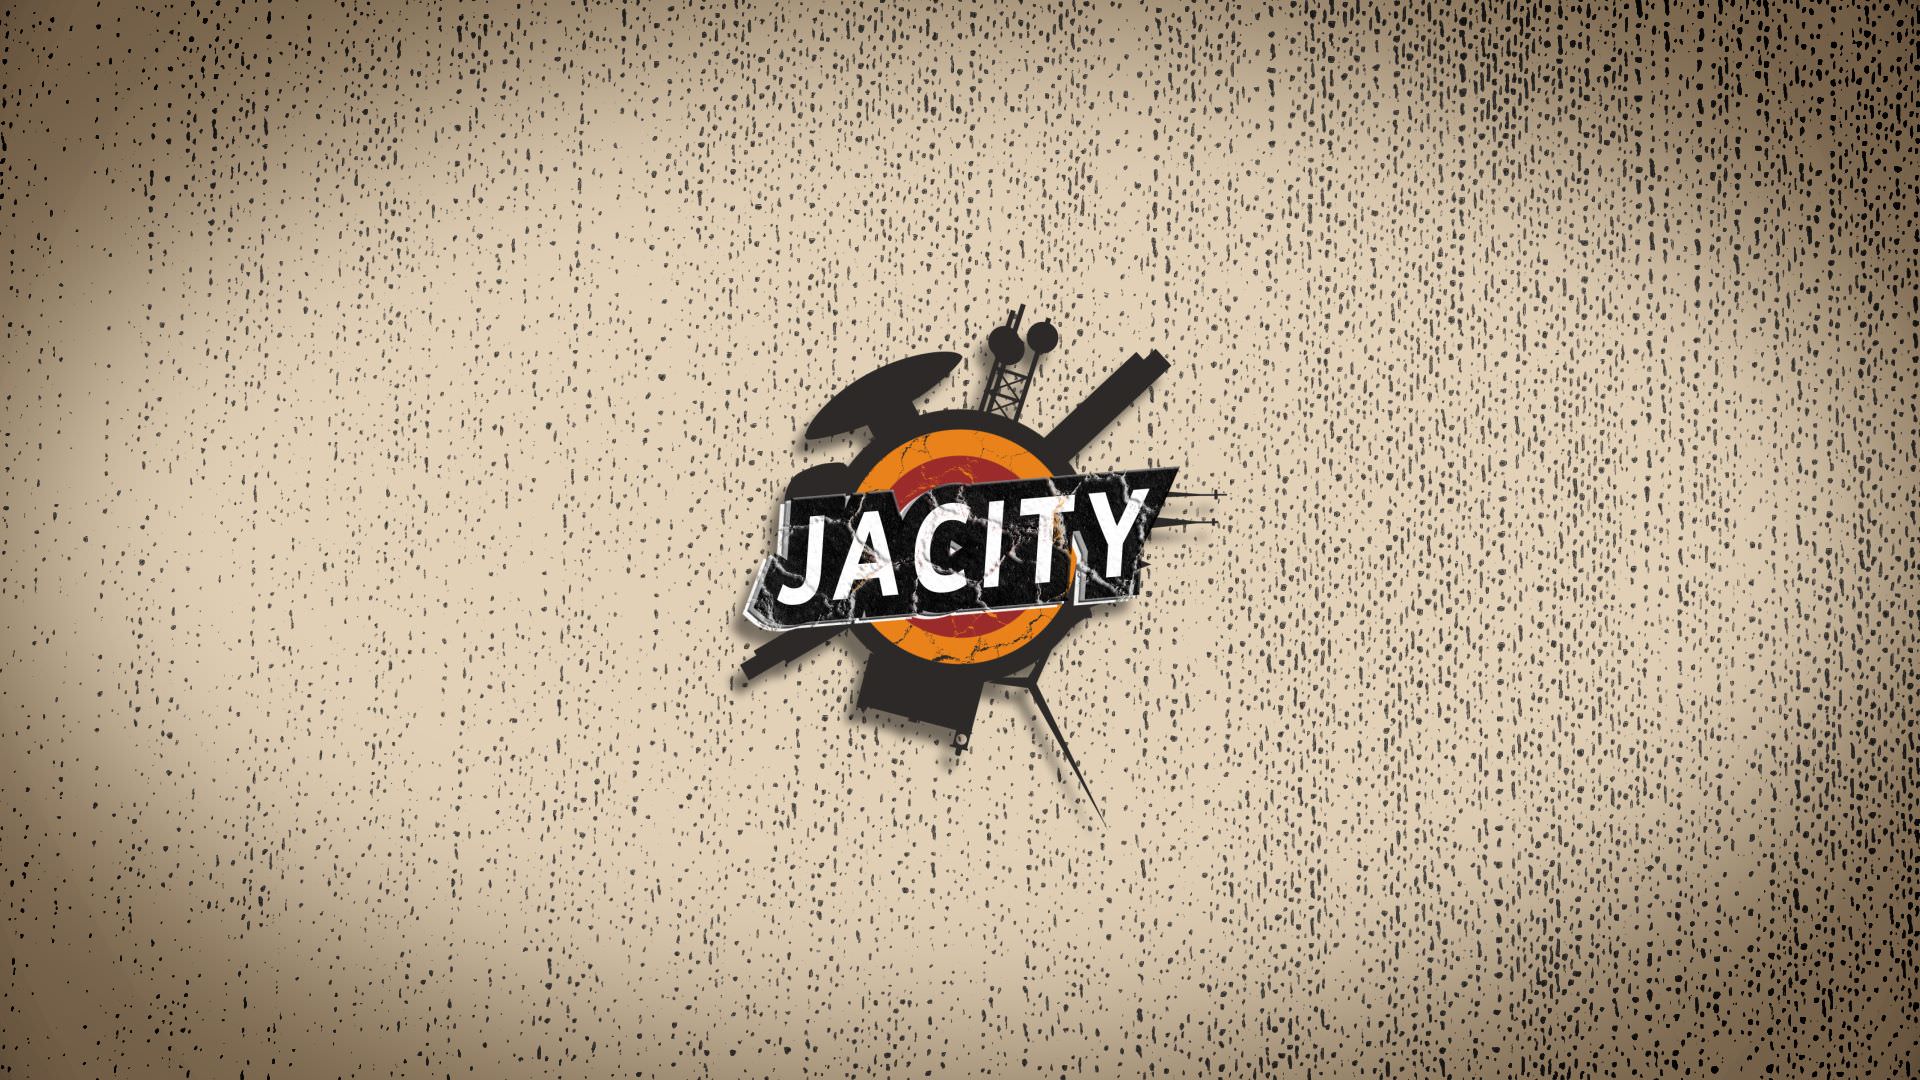 JaCity Achtergrond